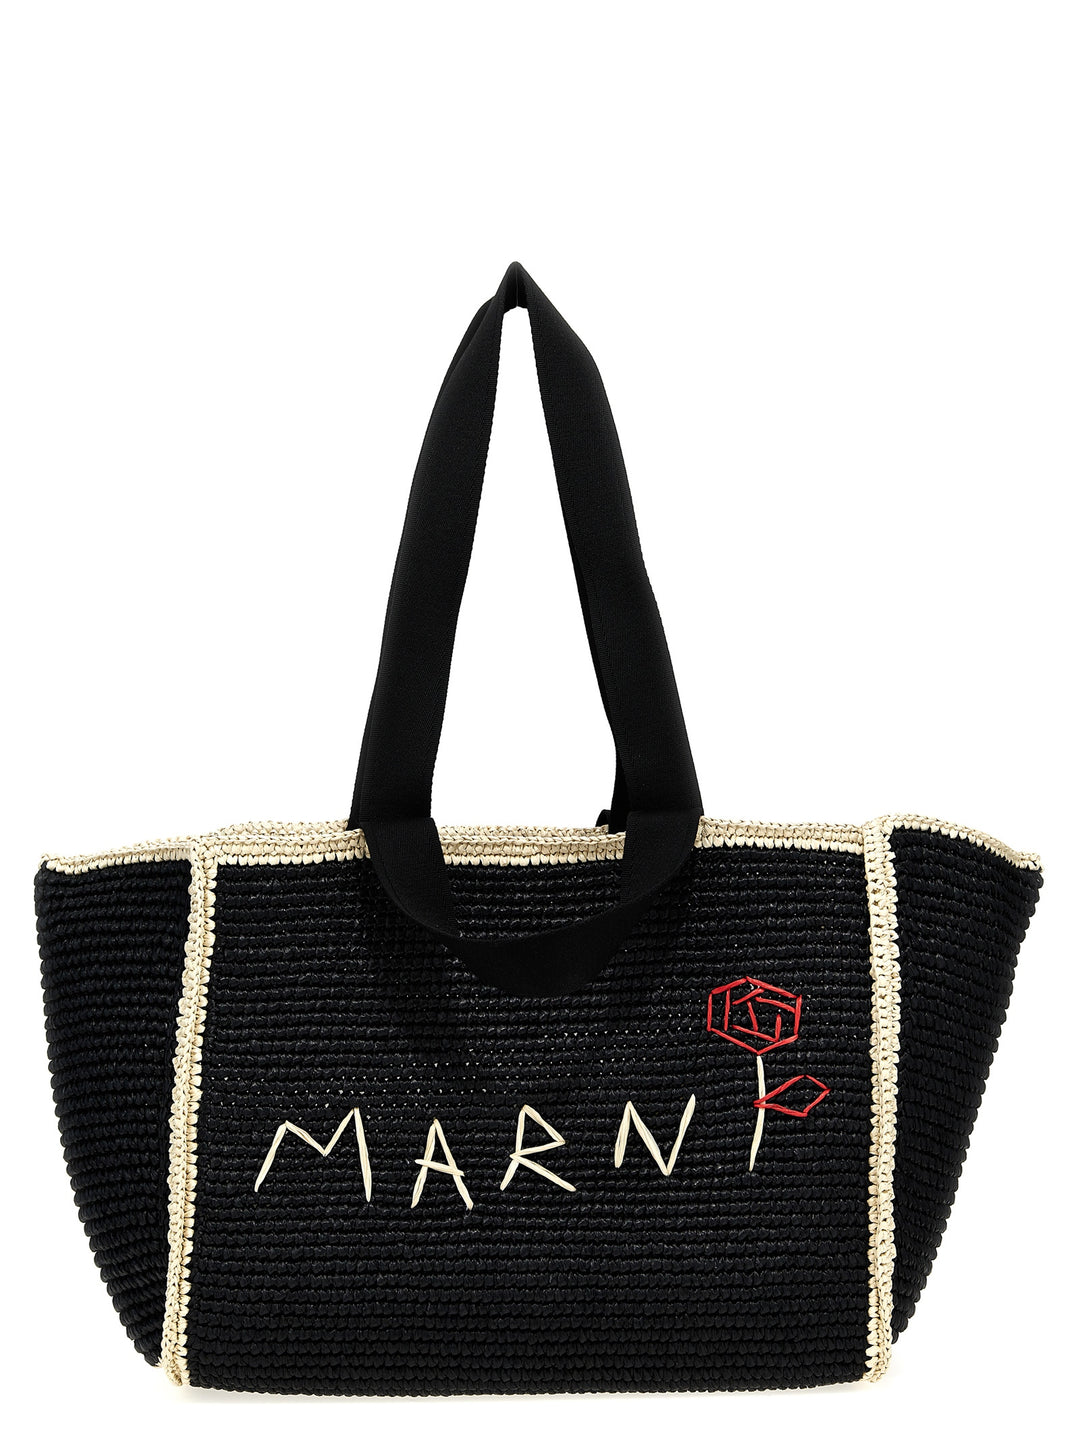 Macramé Shopping Bag Tote Bianco/Nero